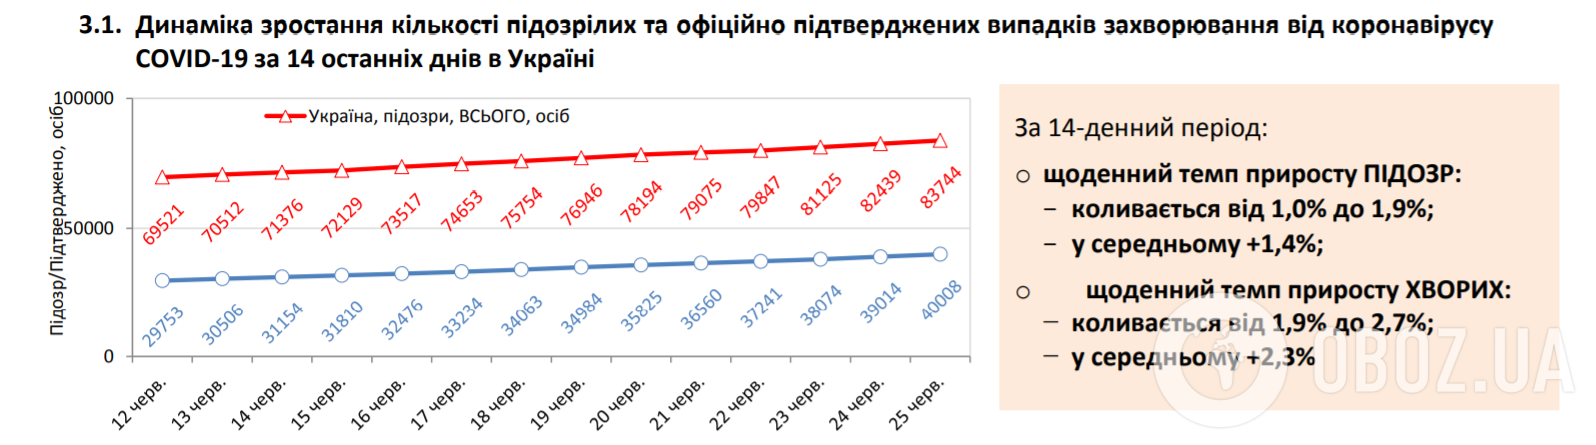 Статистика COVID-19 в Украине